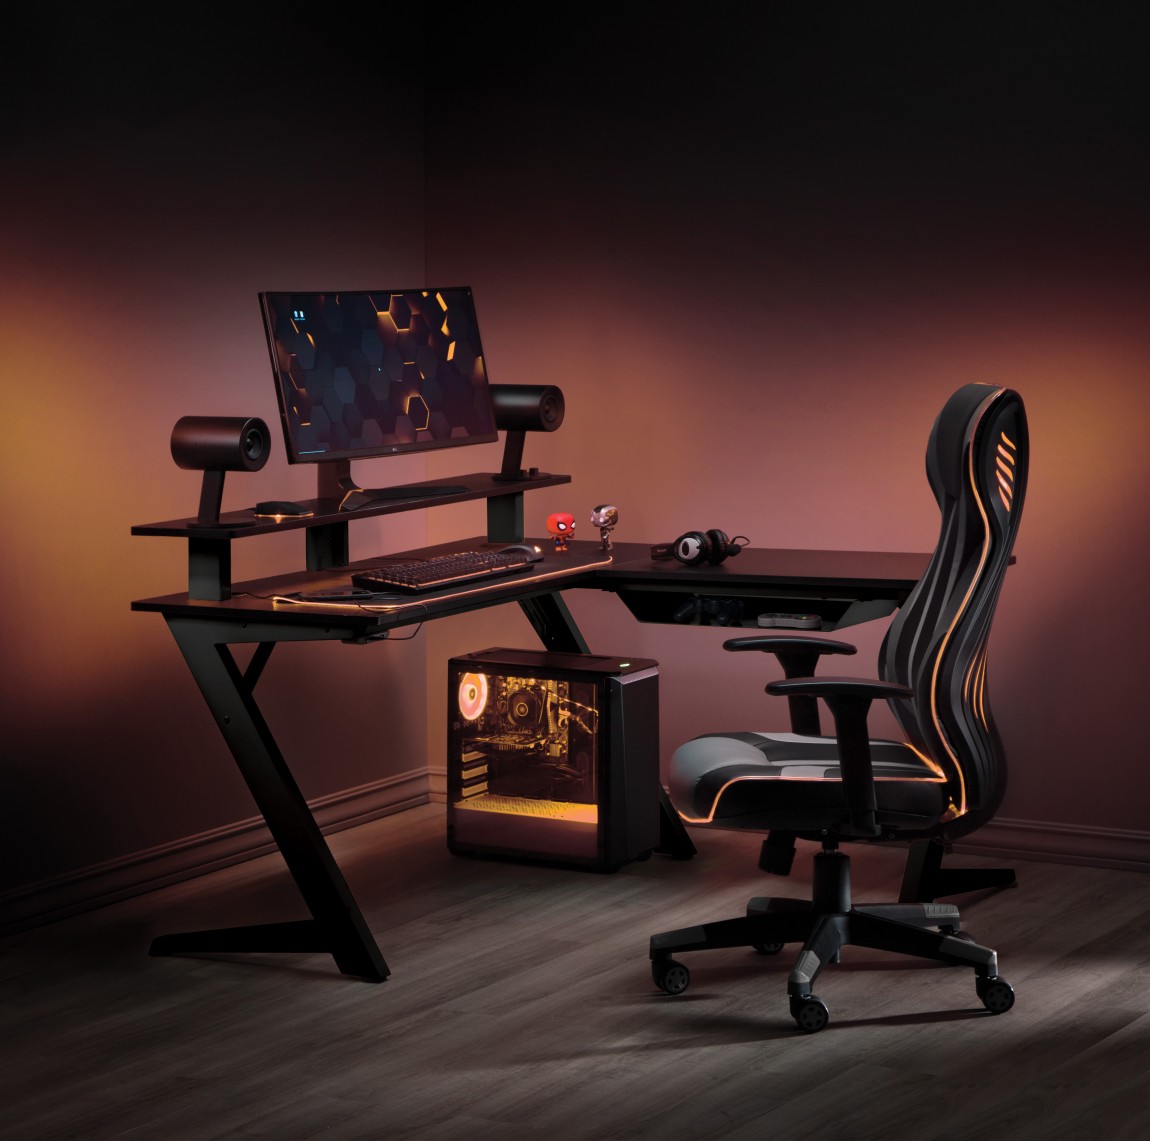 ergonomic chair and warm lighting gaming setup